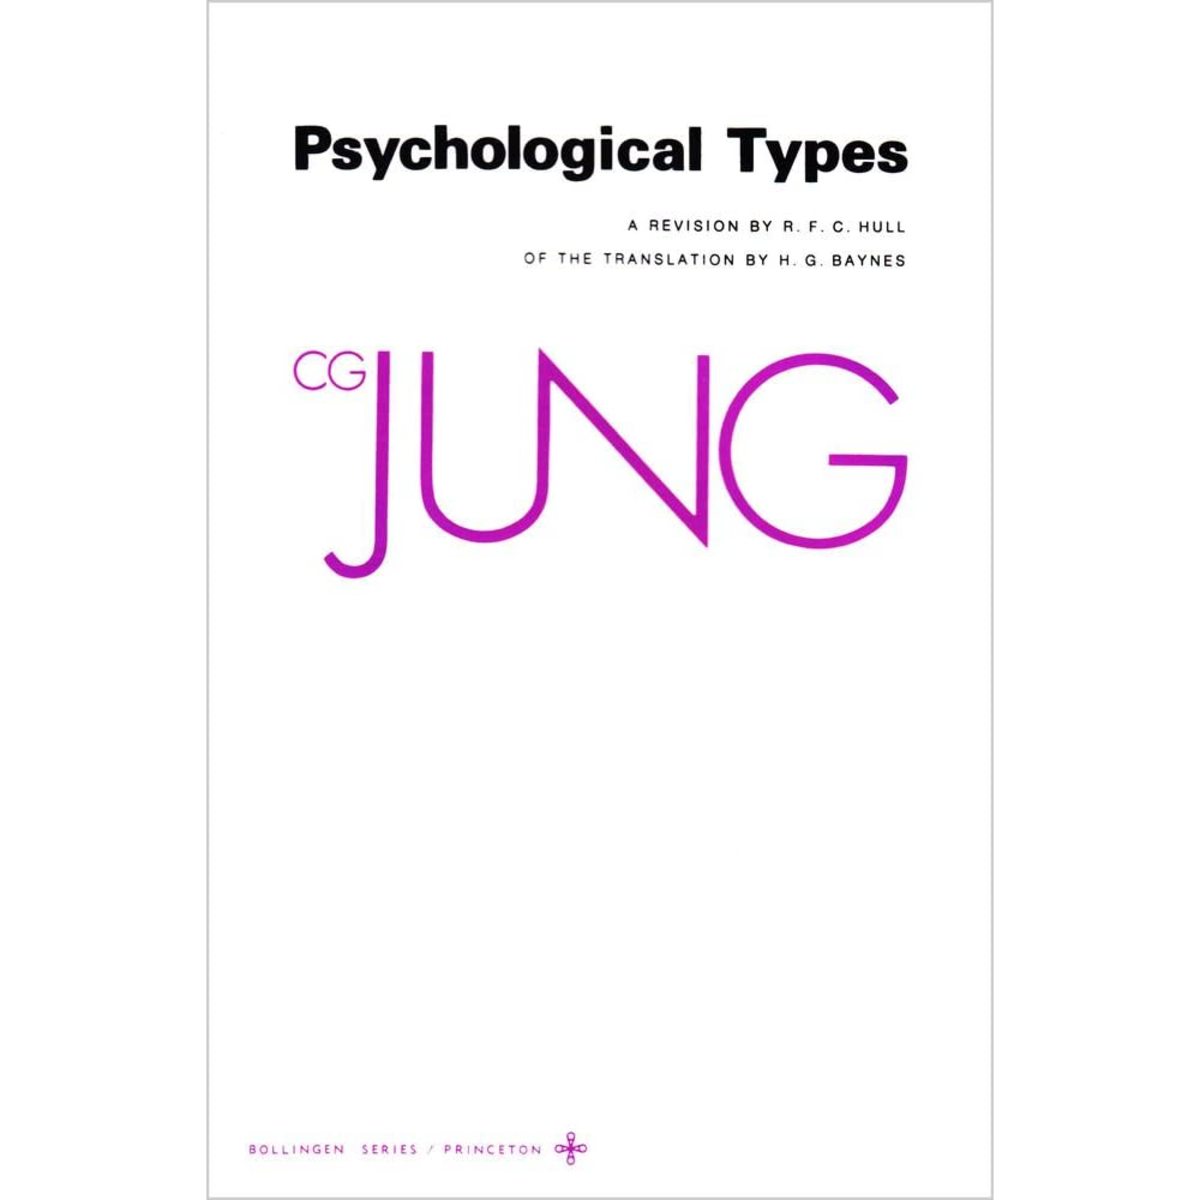 Psychological Types, Carl Jung